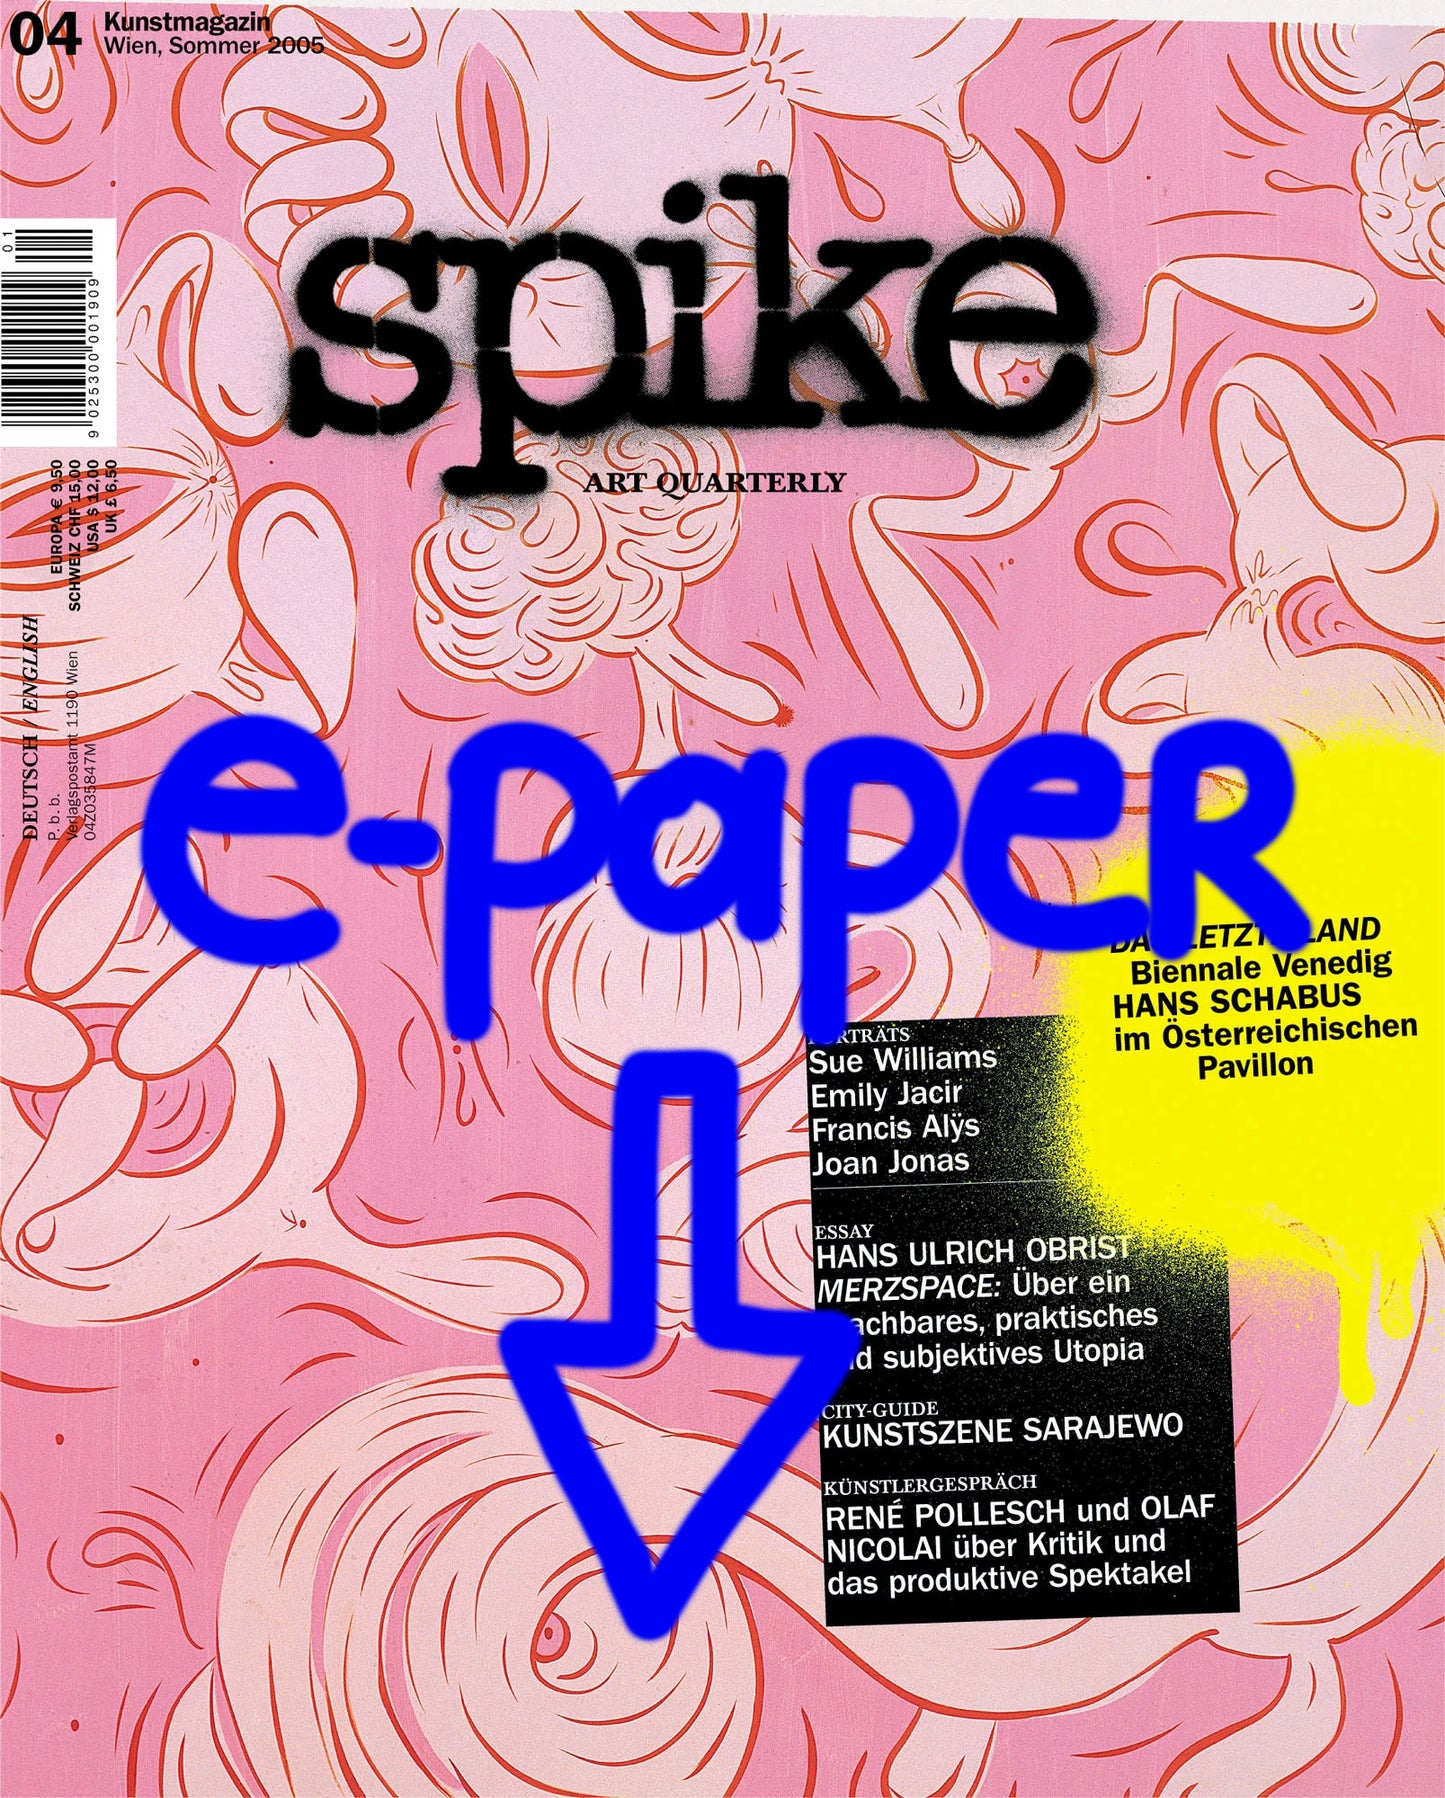 Spike ePaper (Issue 04)